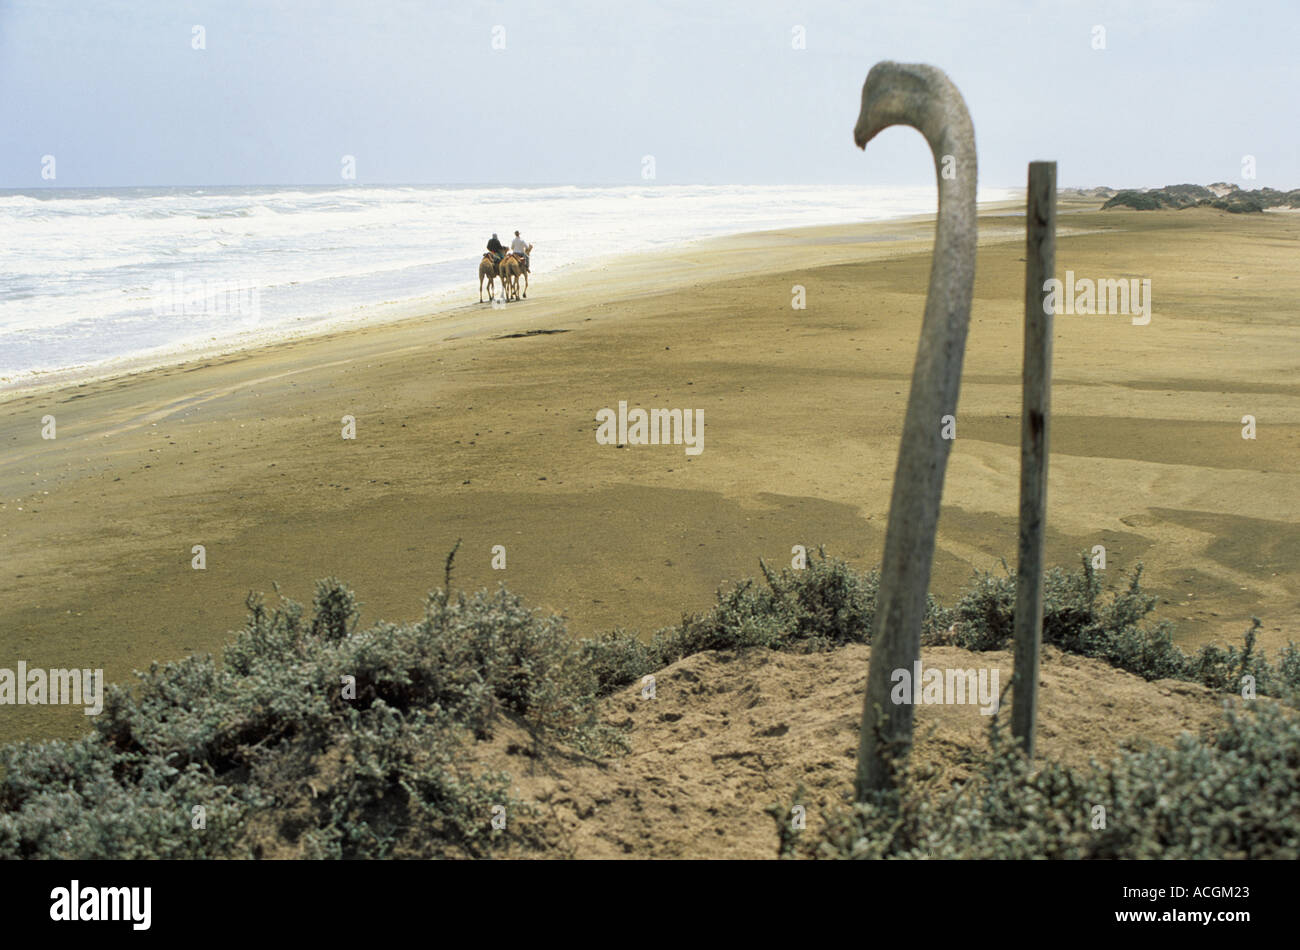 Benedict Allen on his camel journey along the diamond coast Namibia Stock Photo